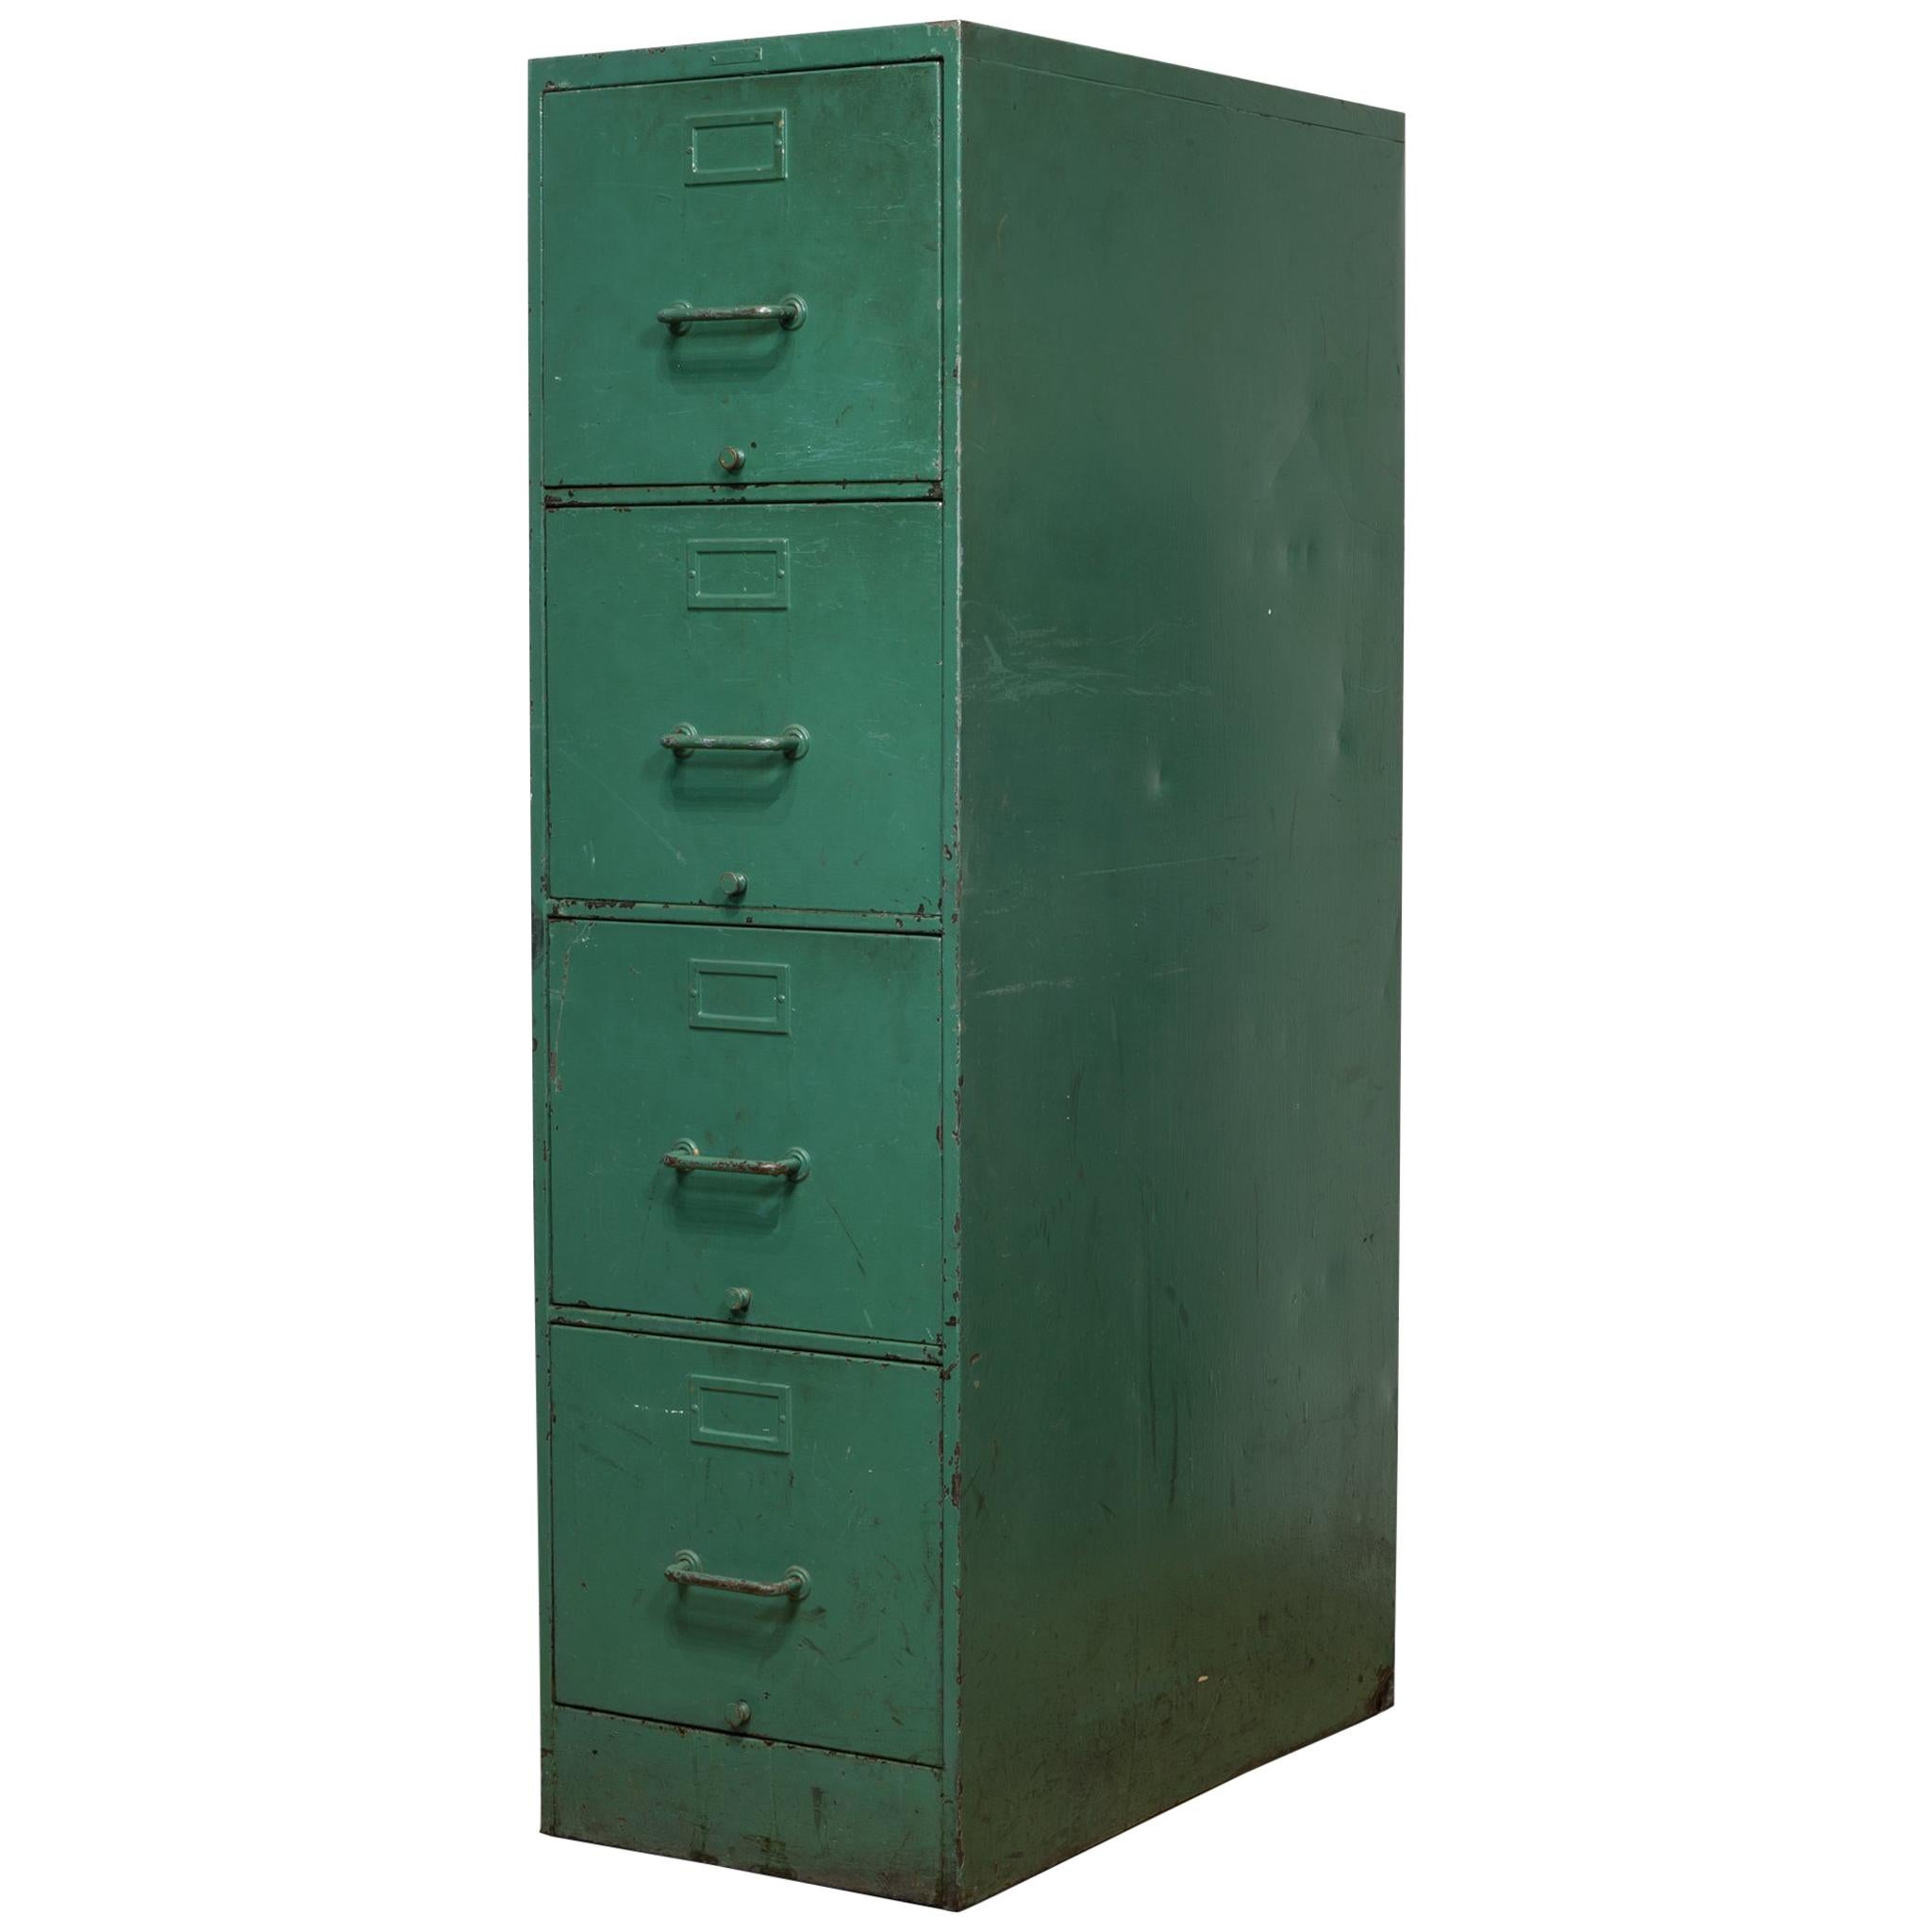 Vintage Metal Filing Cabinet, circa 1940-1950